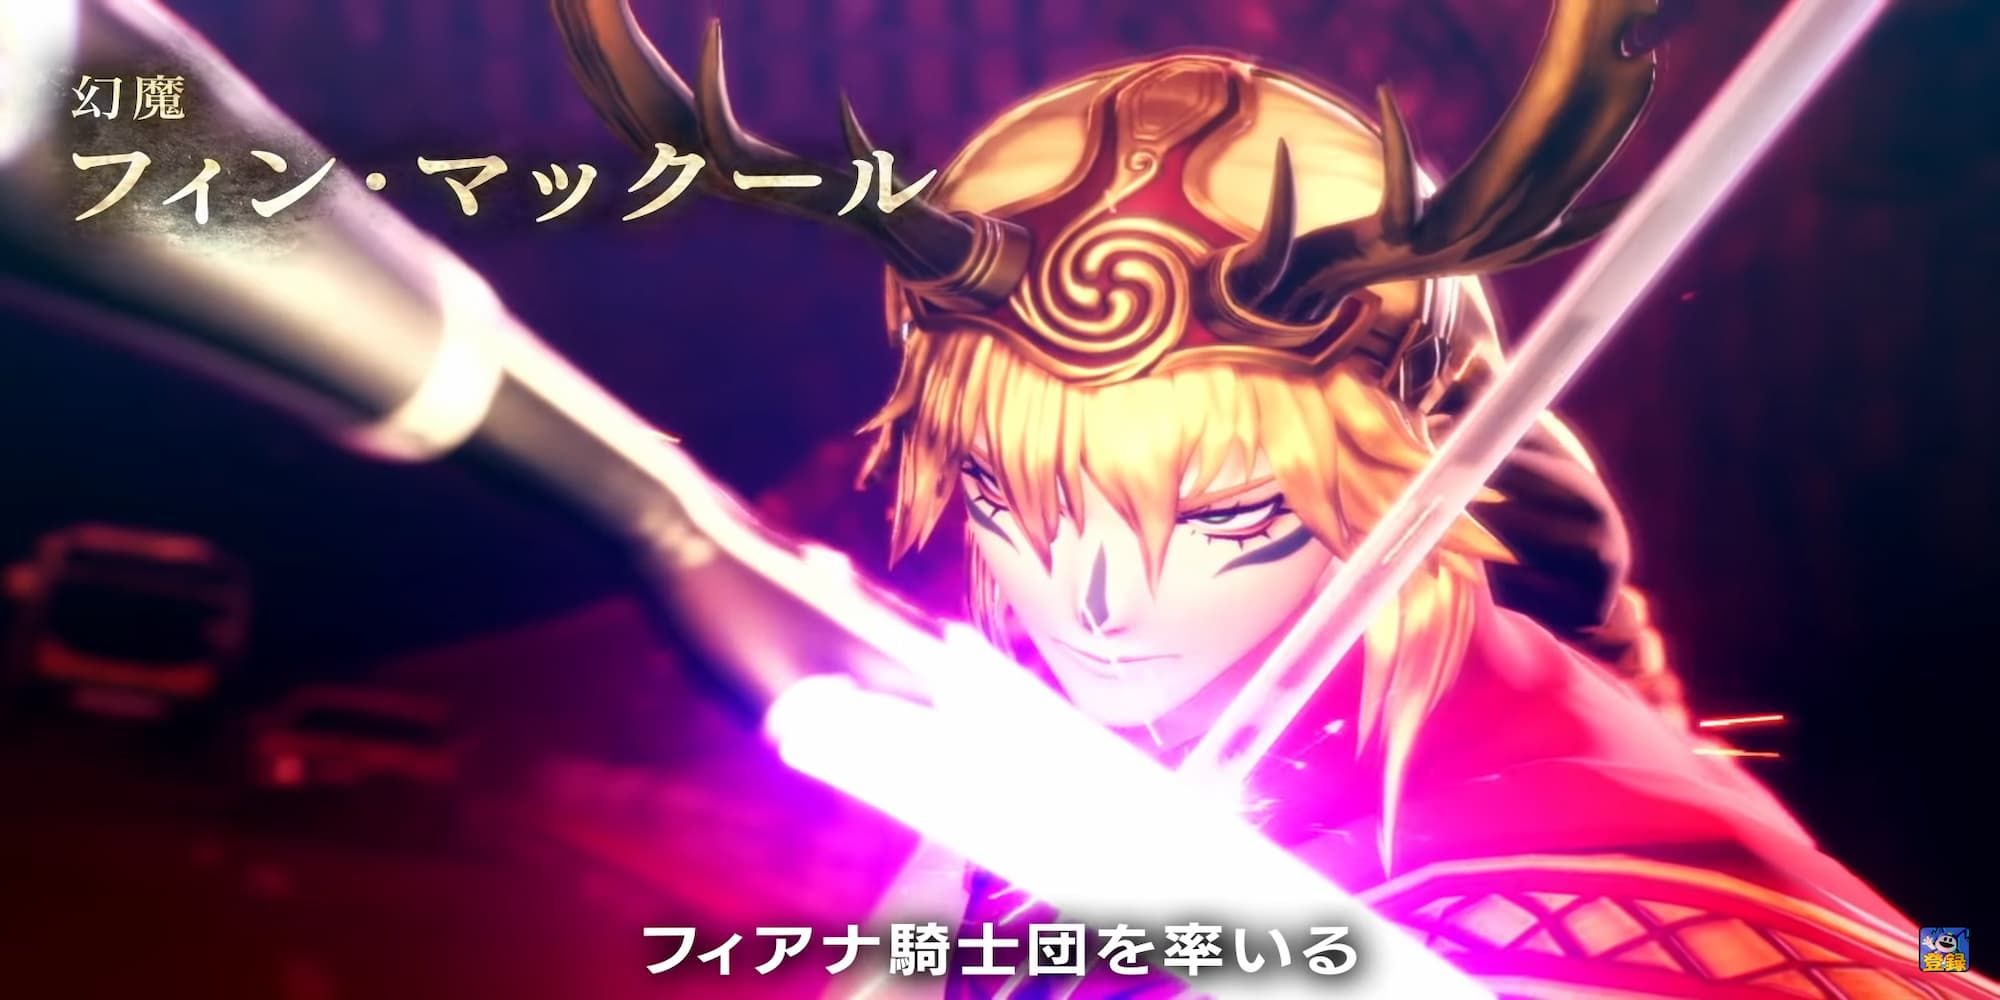 Shin Megami Tensei 5 Fionn Mac Cumhail closeup of blond haired male horned crown sword clashing with protagonist staring at him